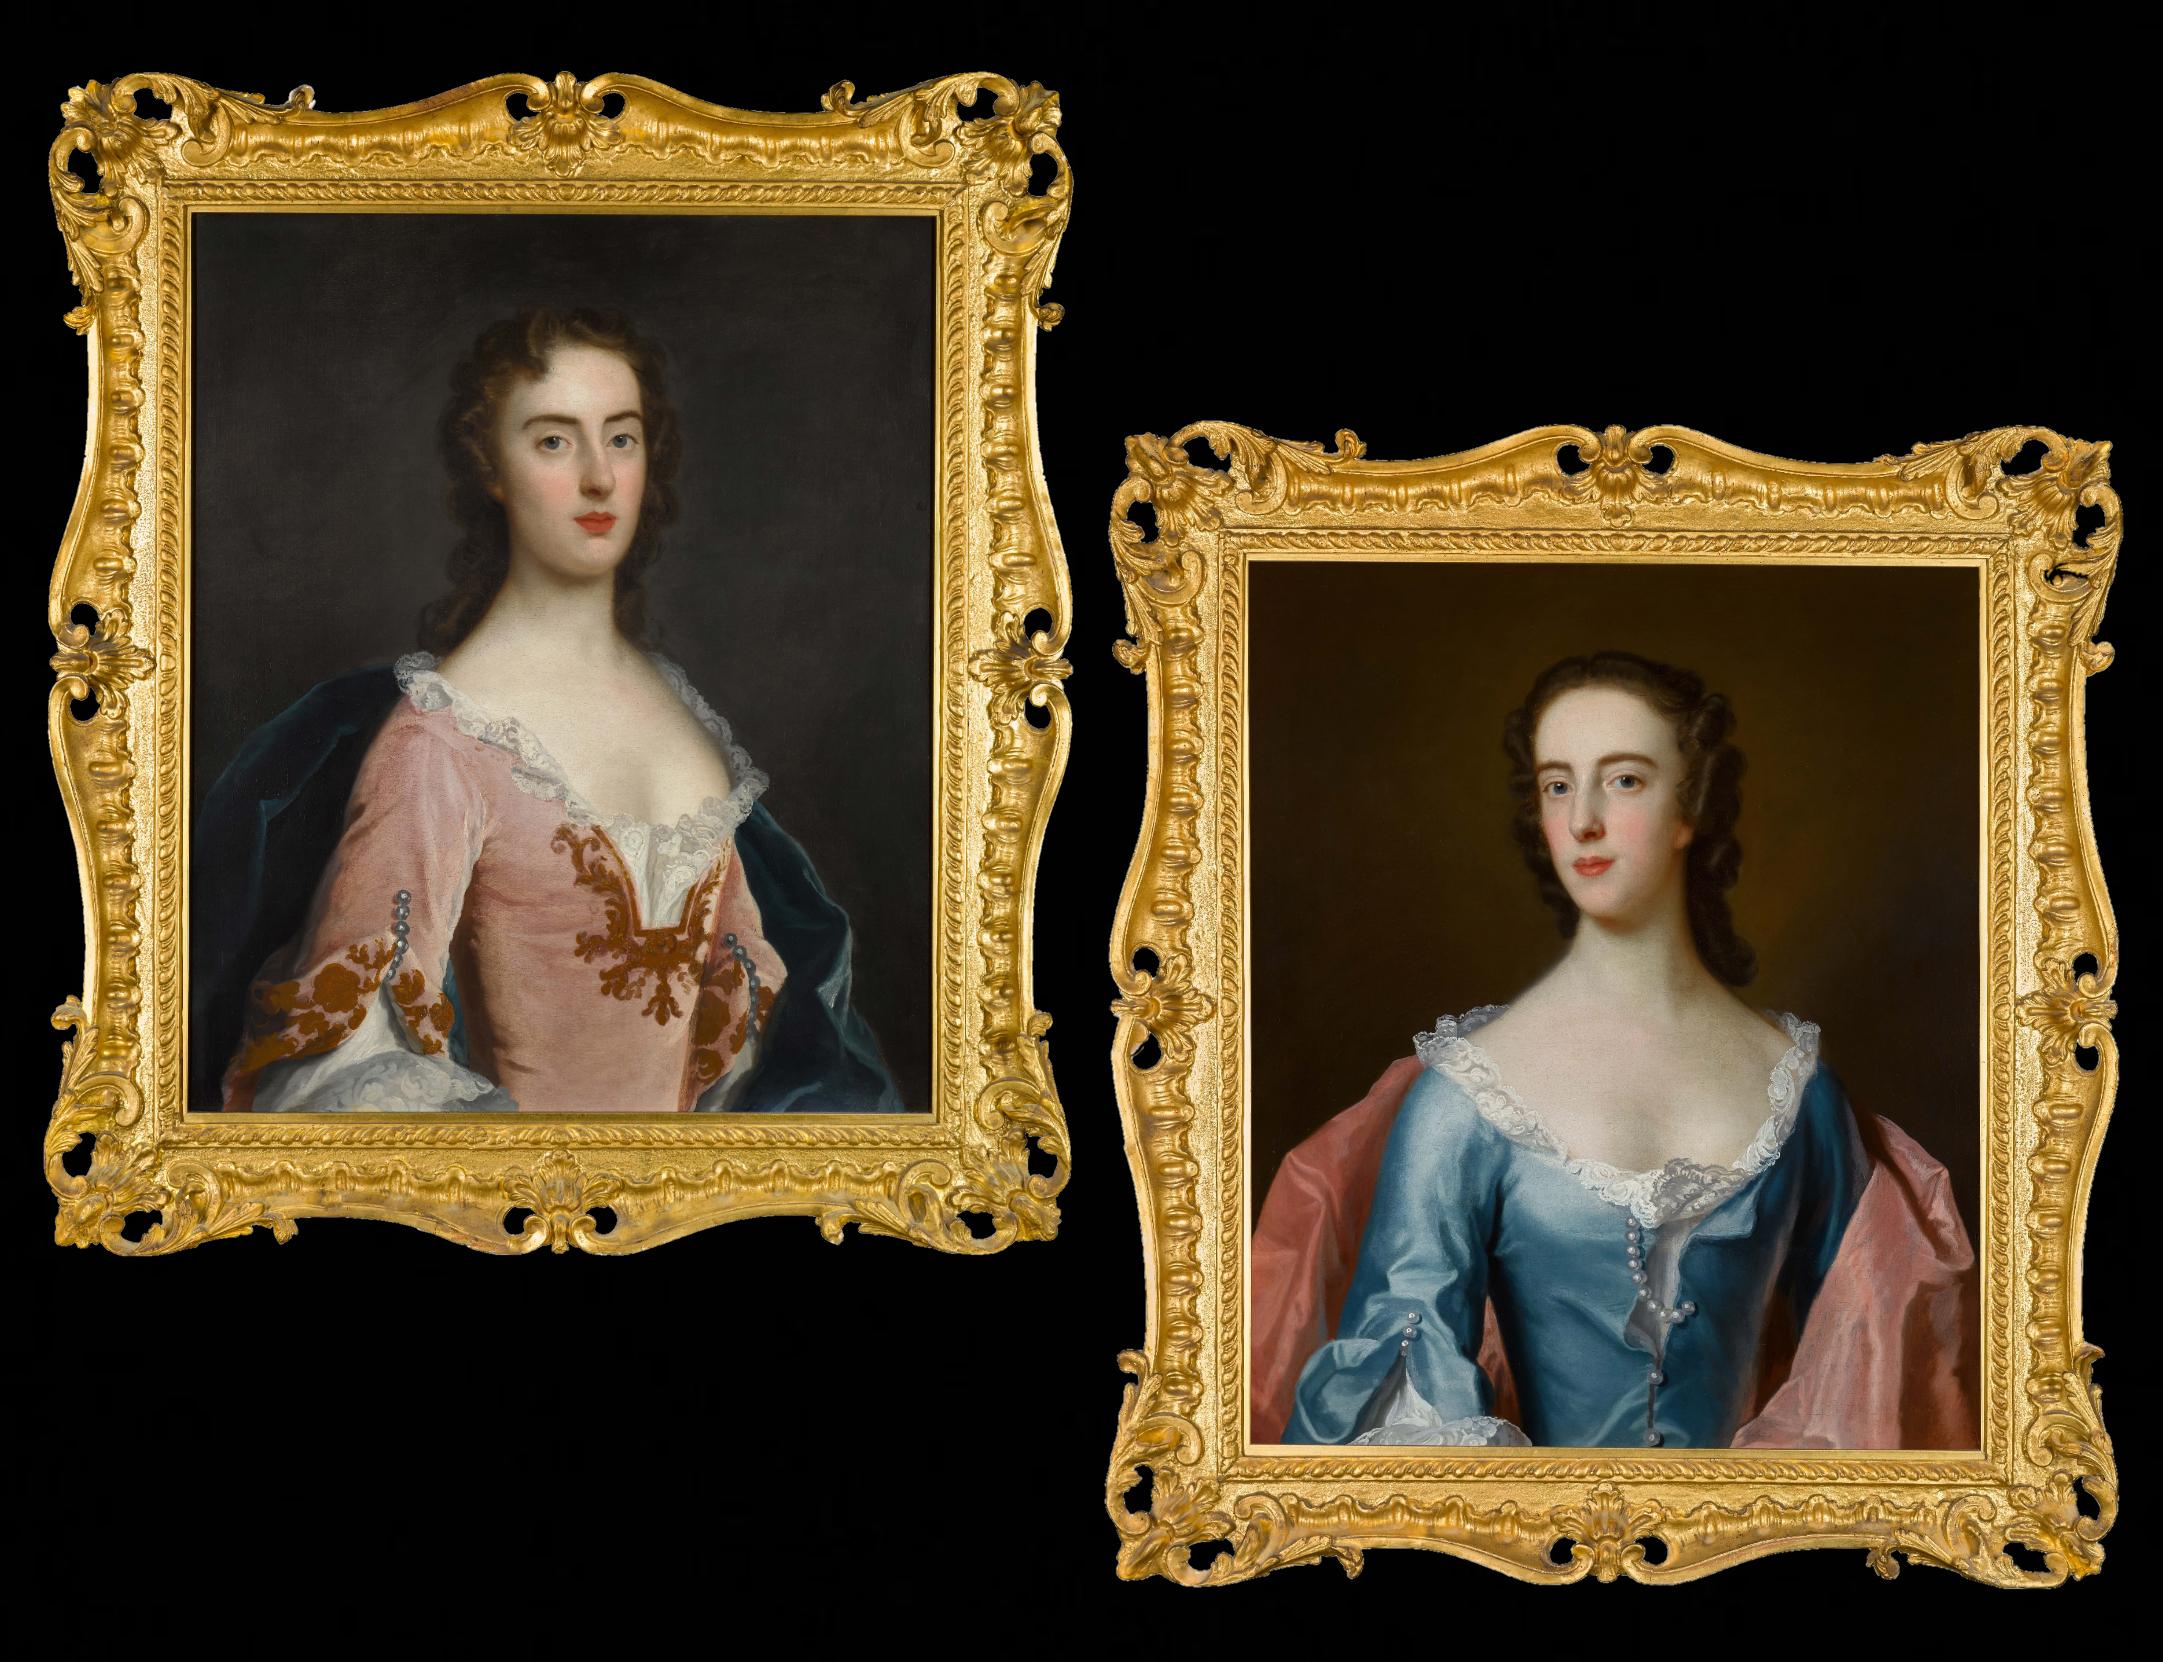 Portraits anglais de femmes, Dorothy et Jane Wood vers 1750, cadres sculptés remarquables - Art de John Theodore Heins